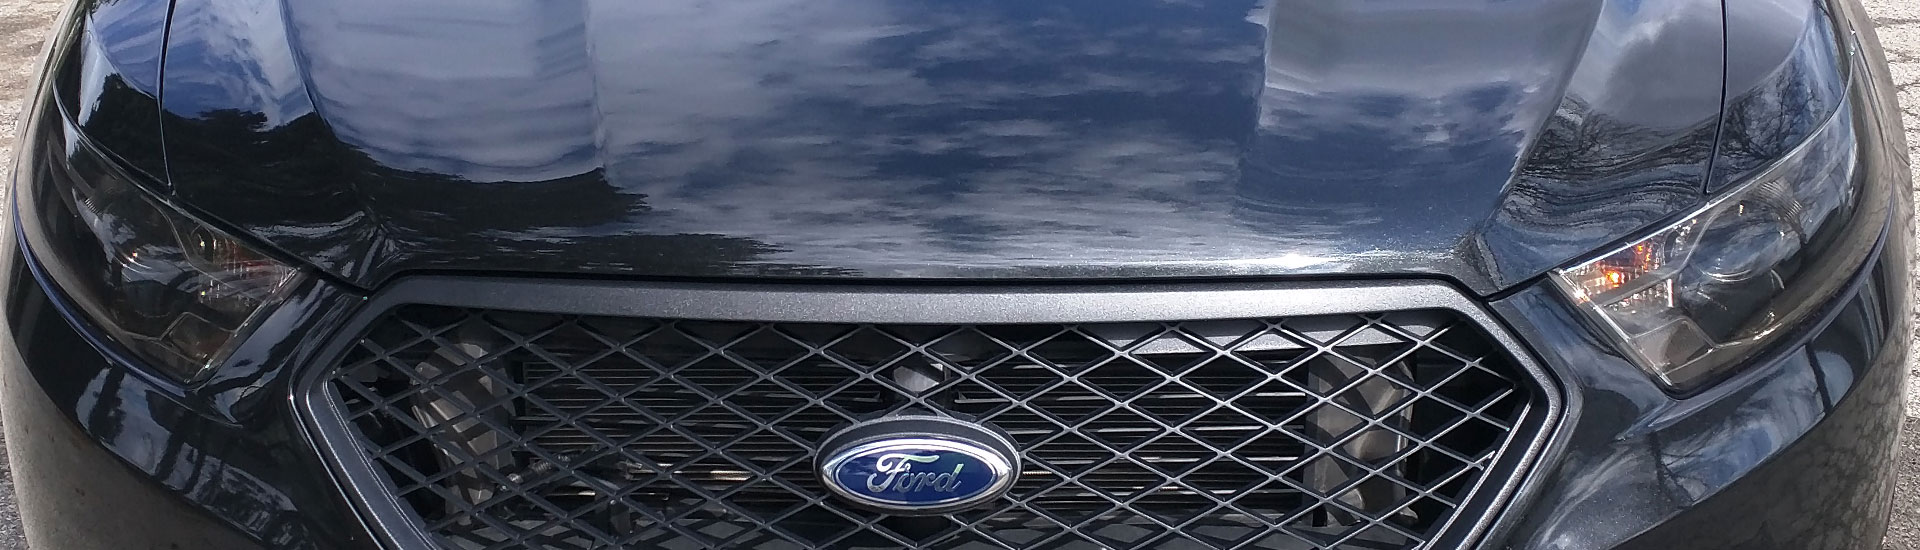 Ford Taurus Headlight Tint Covers